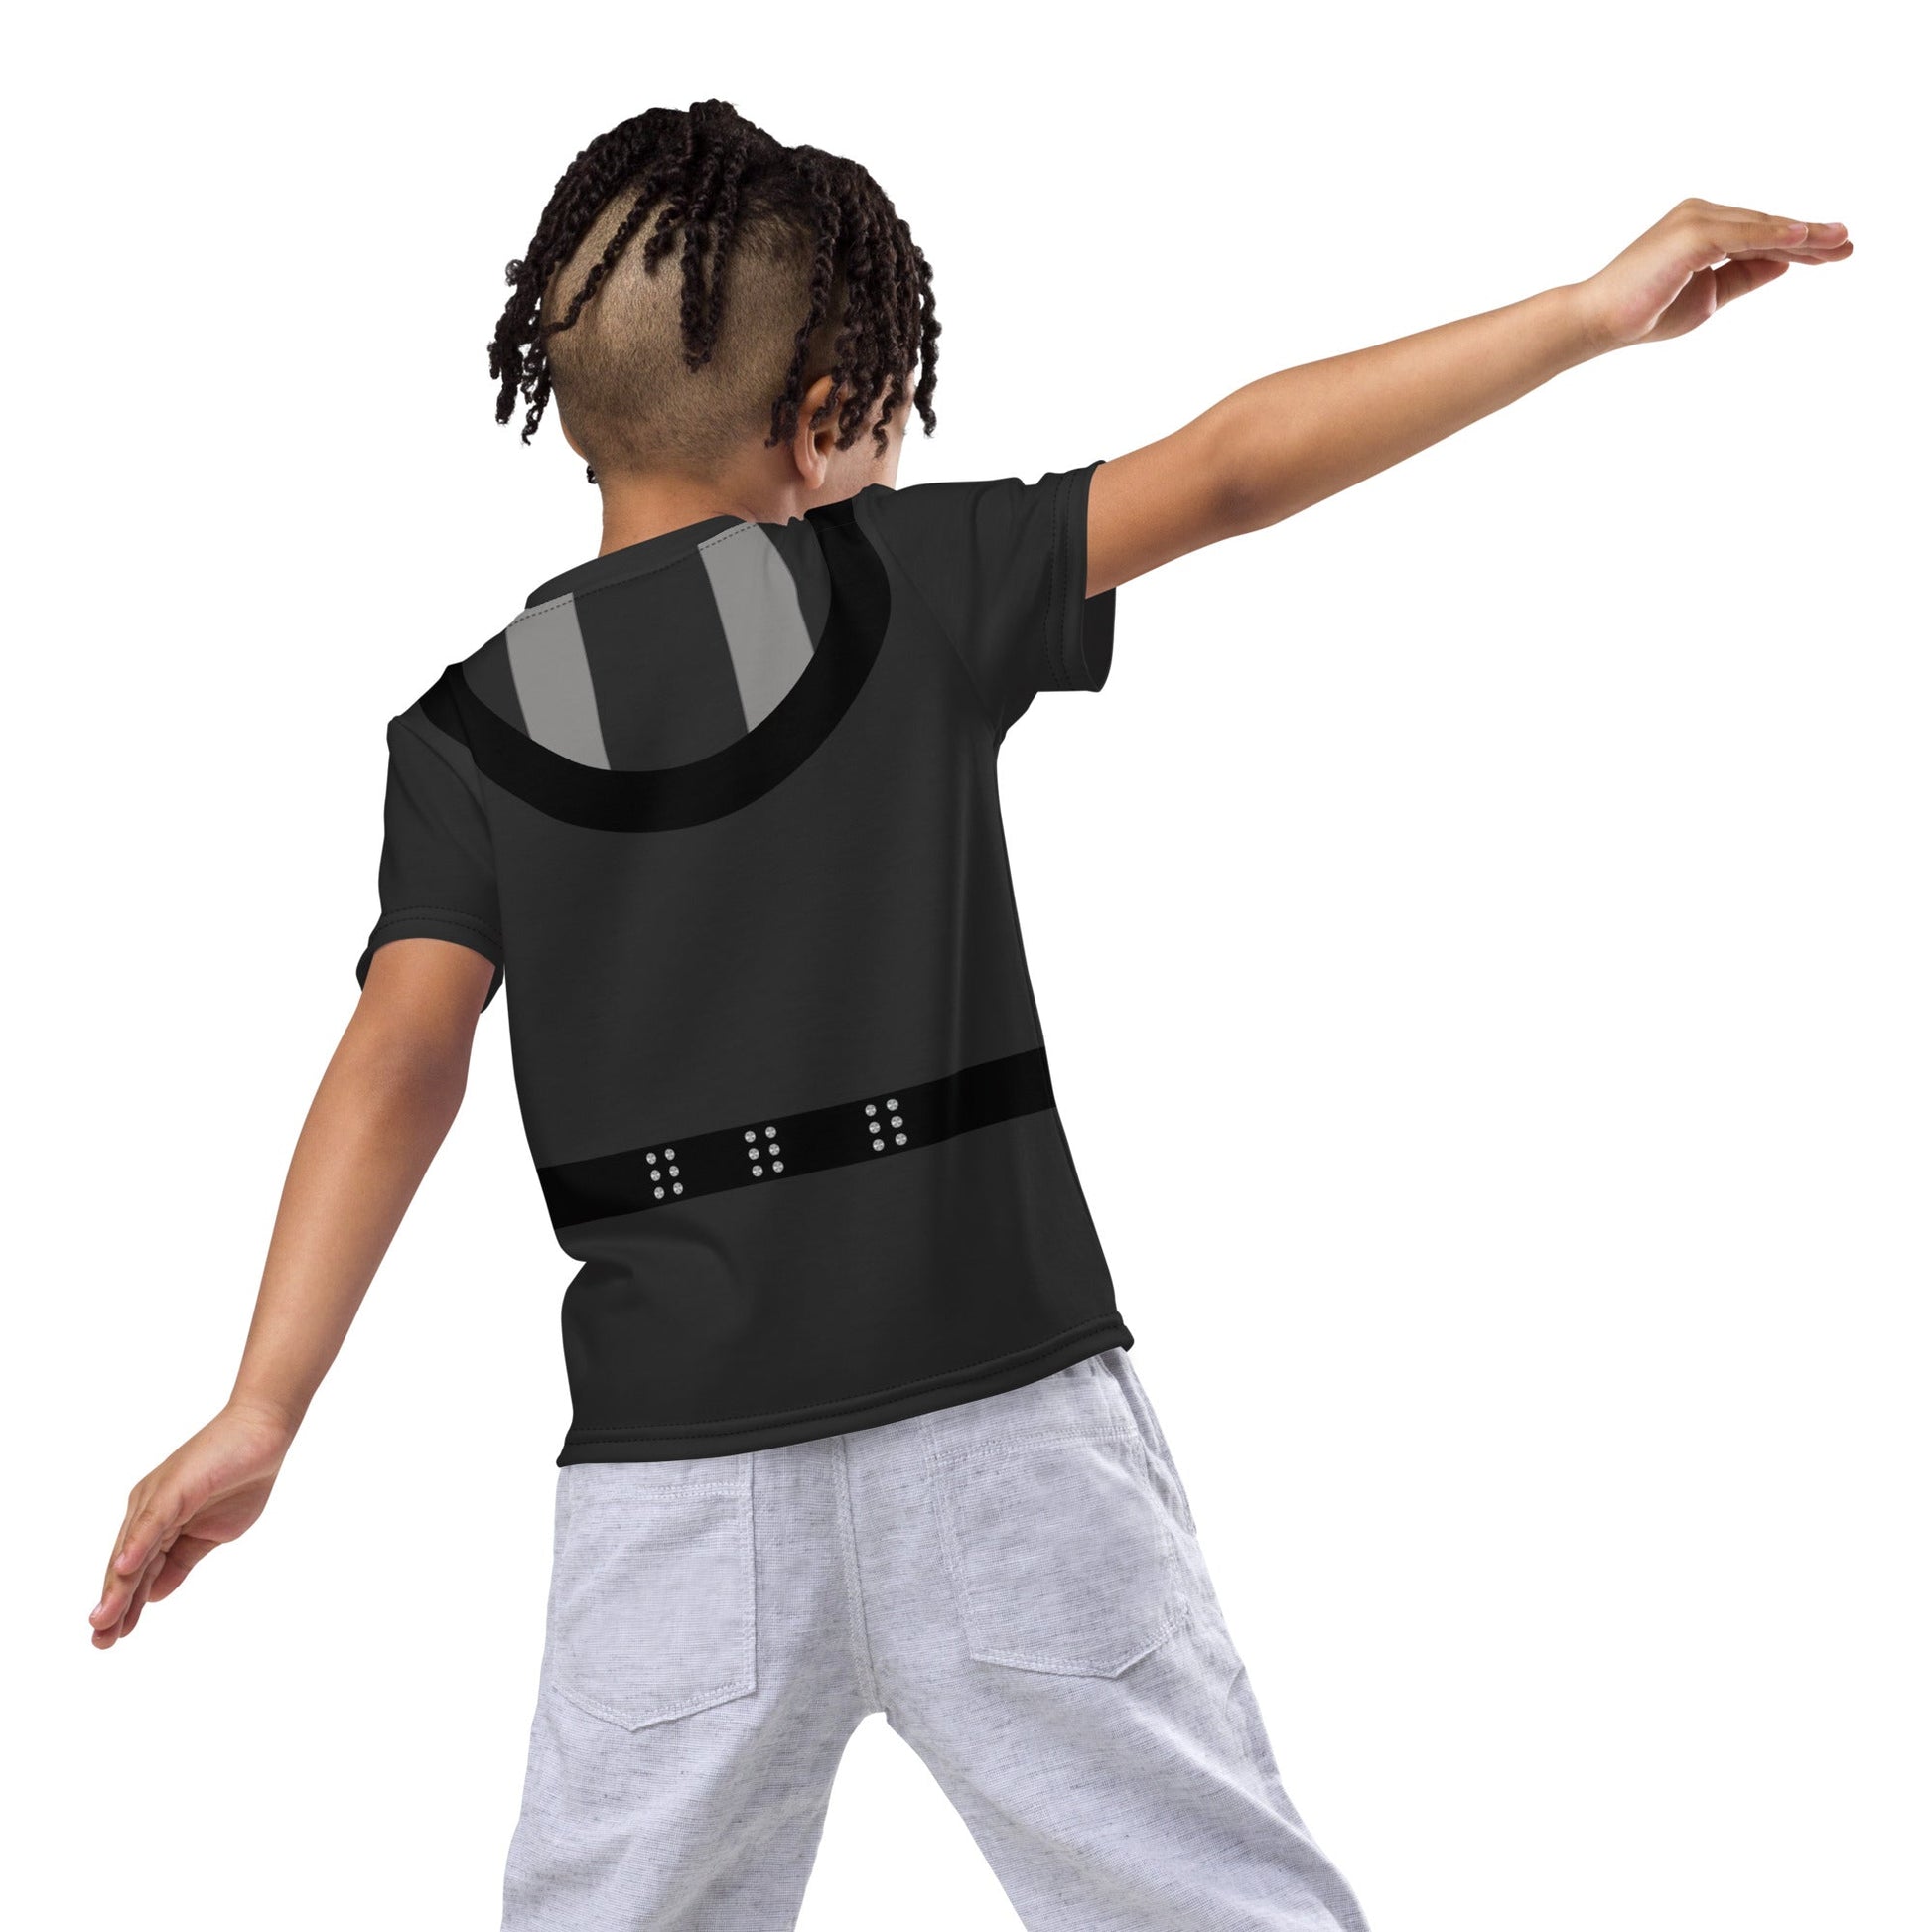 Dark Side Kids crew neck t-shirt active wearcostumedarth vader#tag4##tag5##tag6#